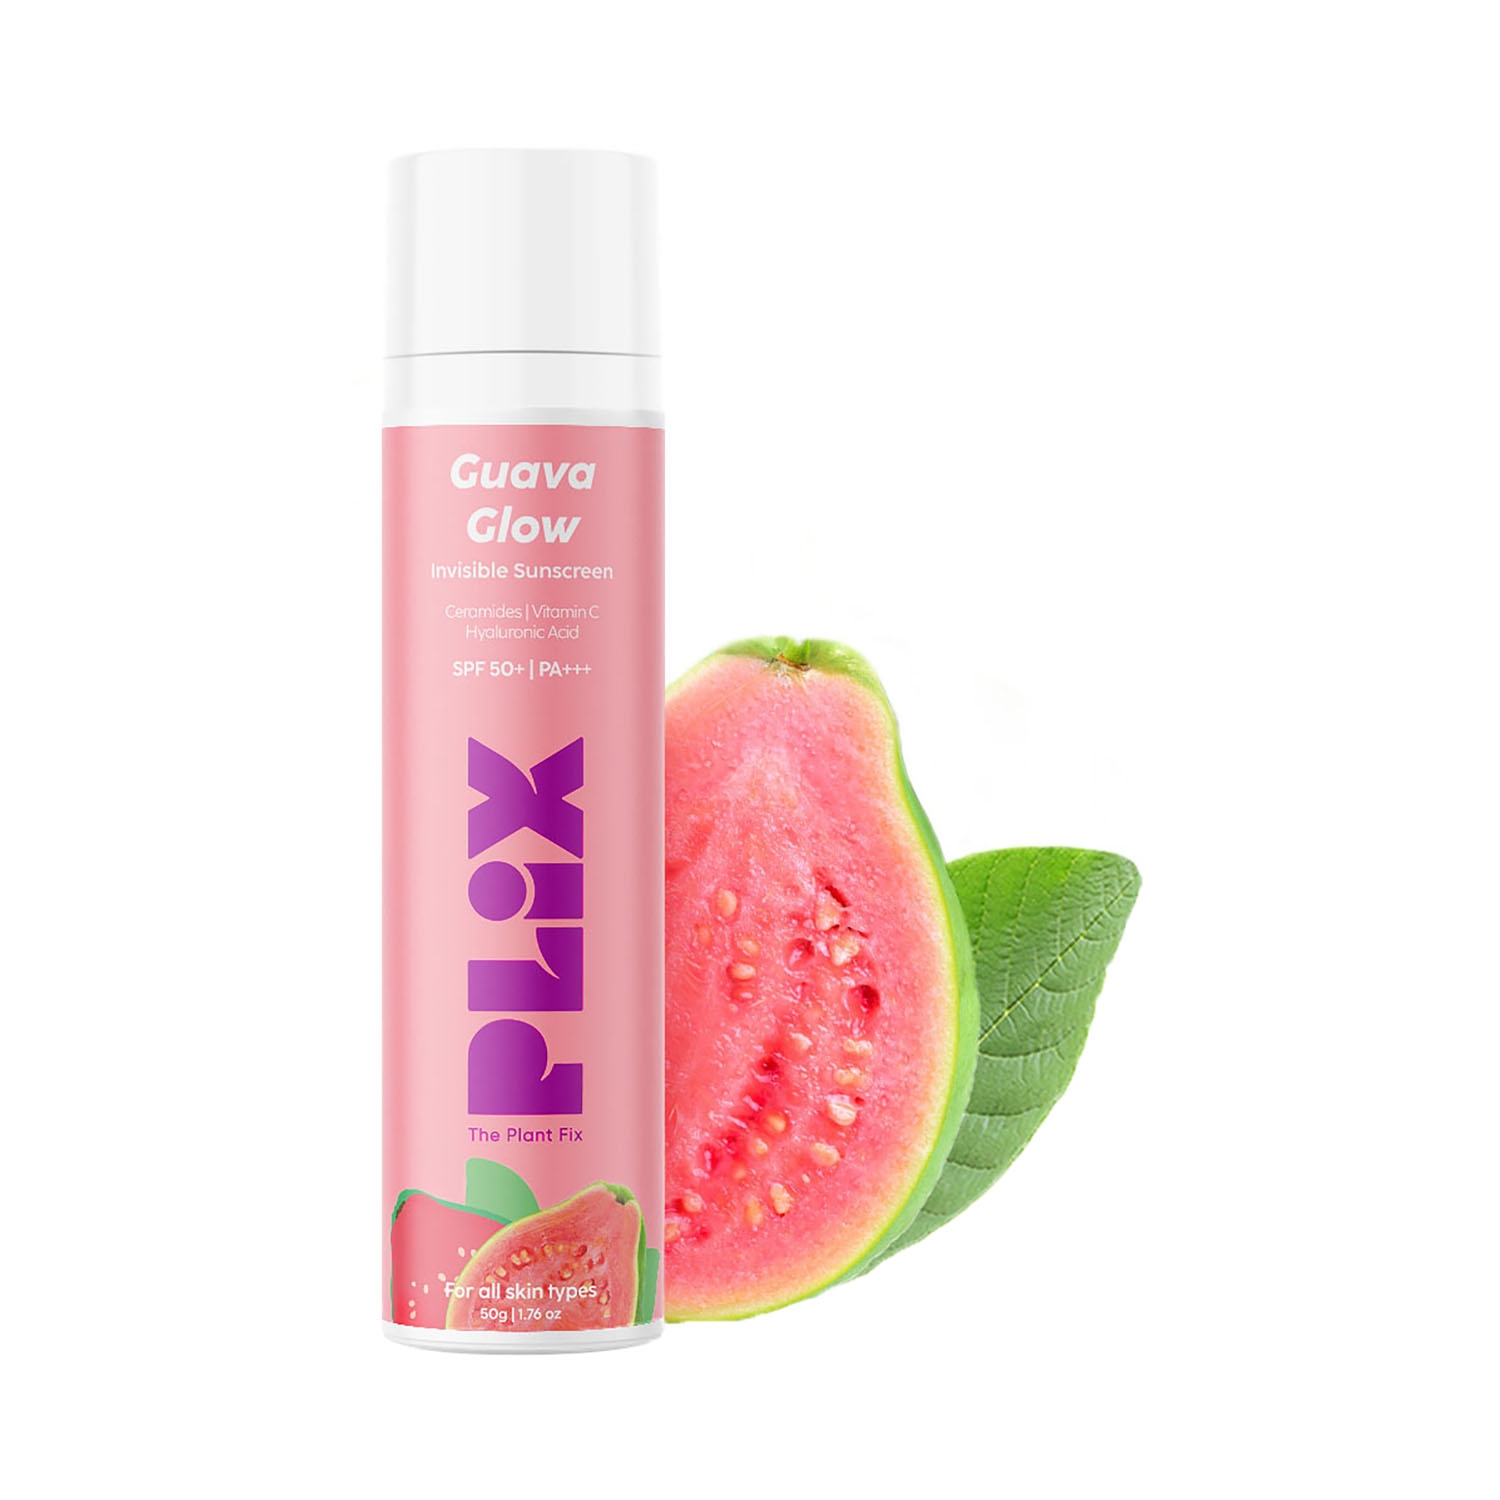 Plix The Plant Fix | Plix The Plant Fix Guava Glow Invisible Sunscreen Gel SPF 50+ (50g)